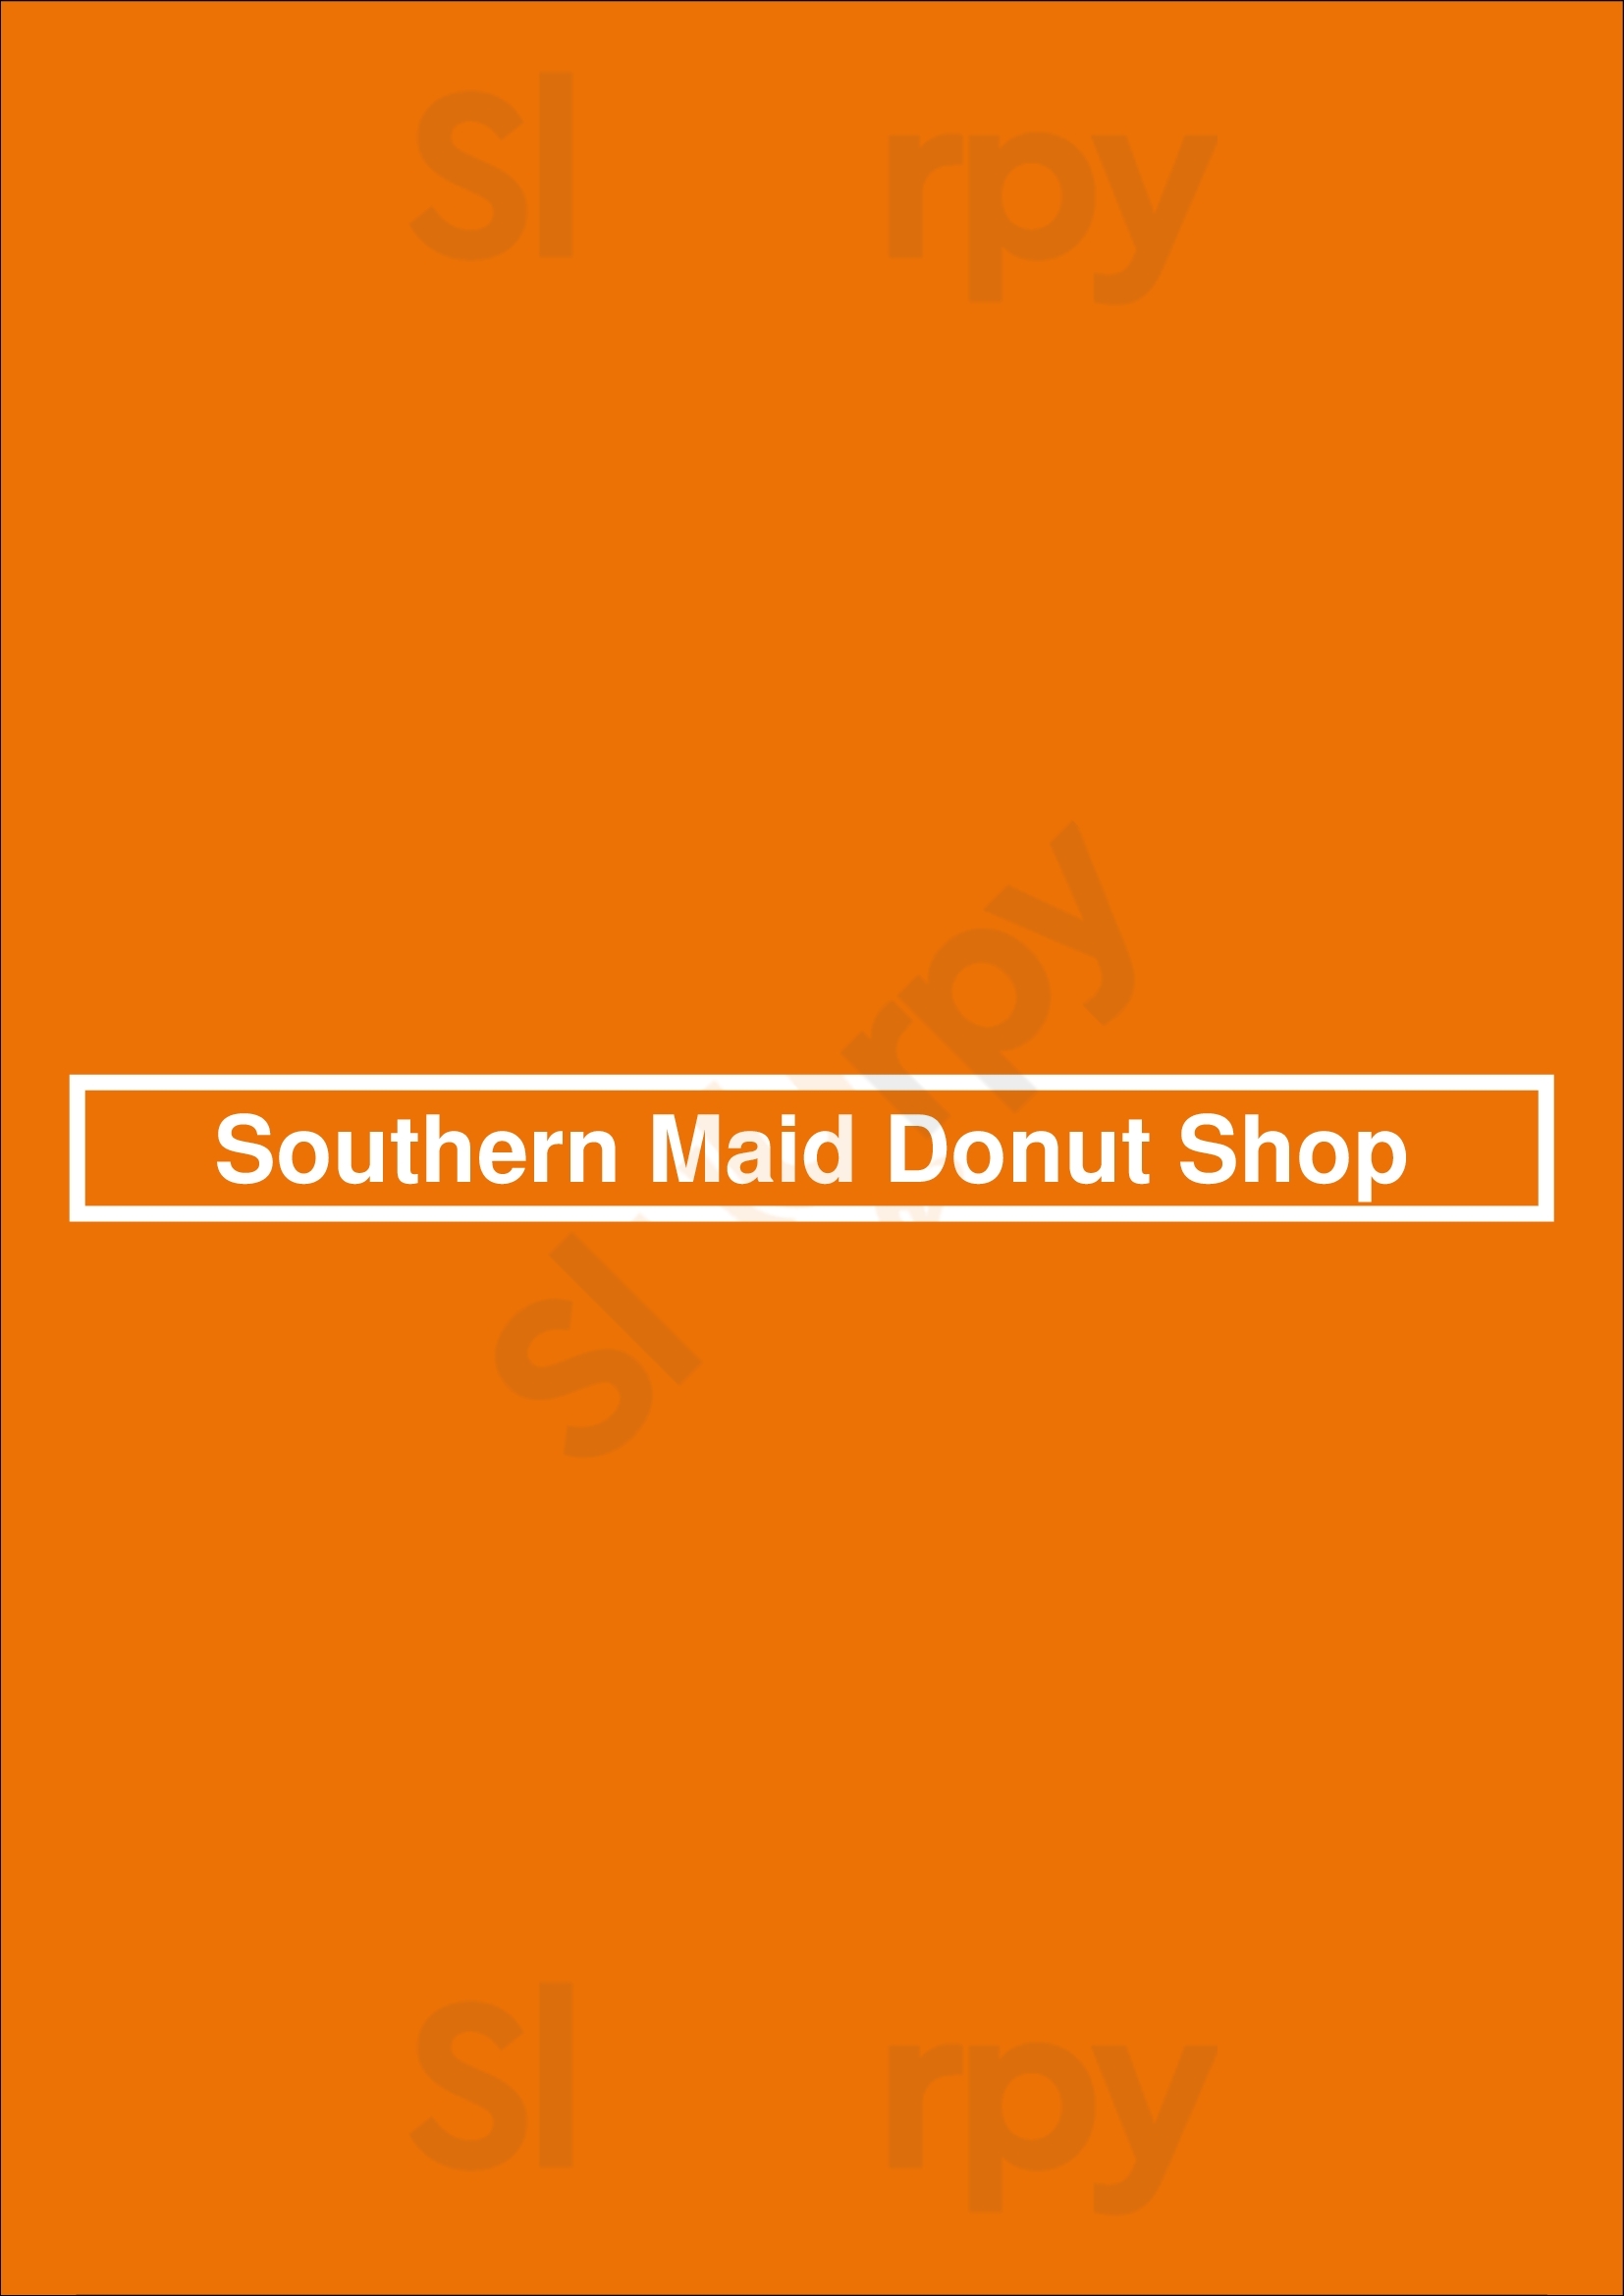 Southern Maid Donut Shop Cypress Menu - 1